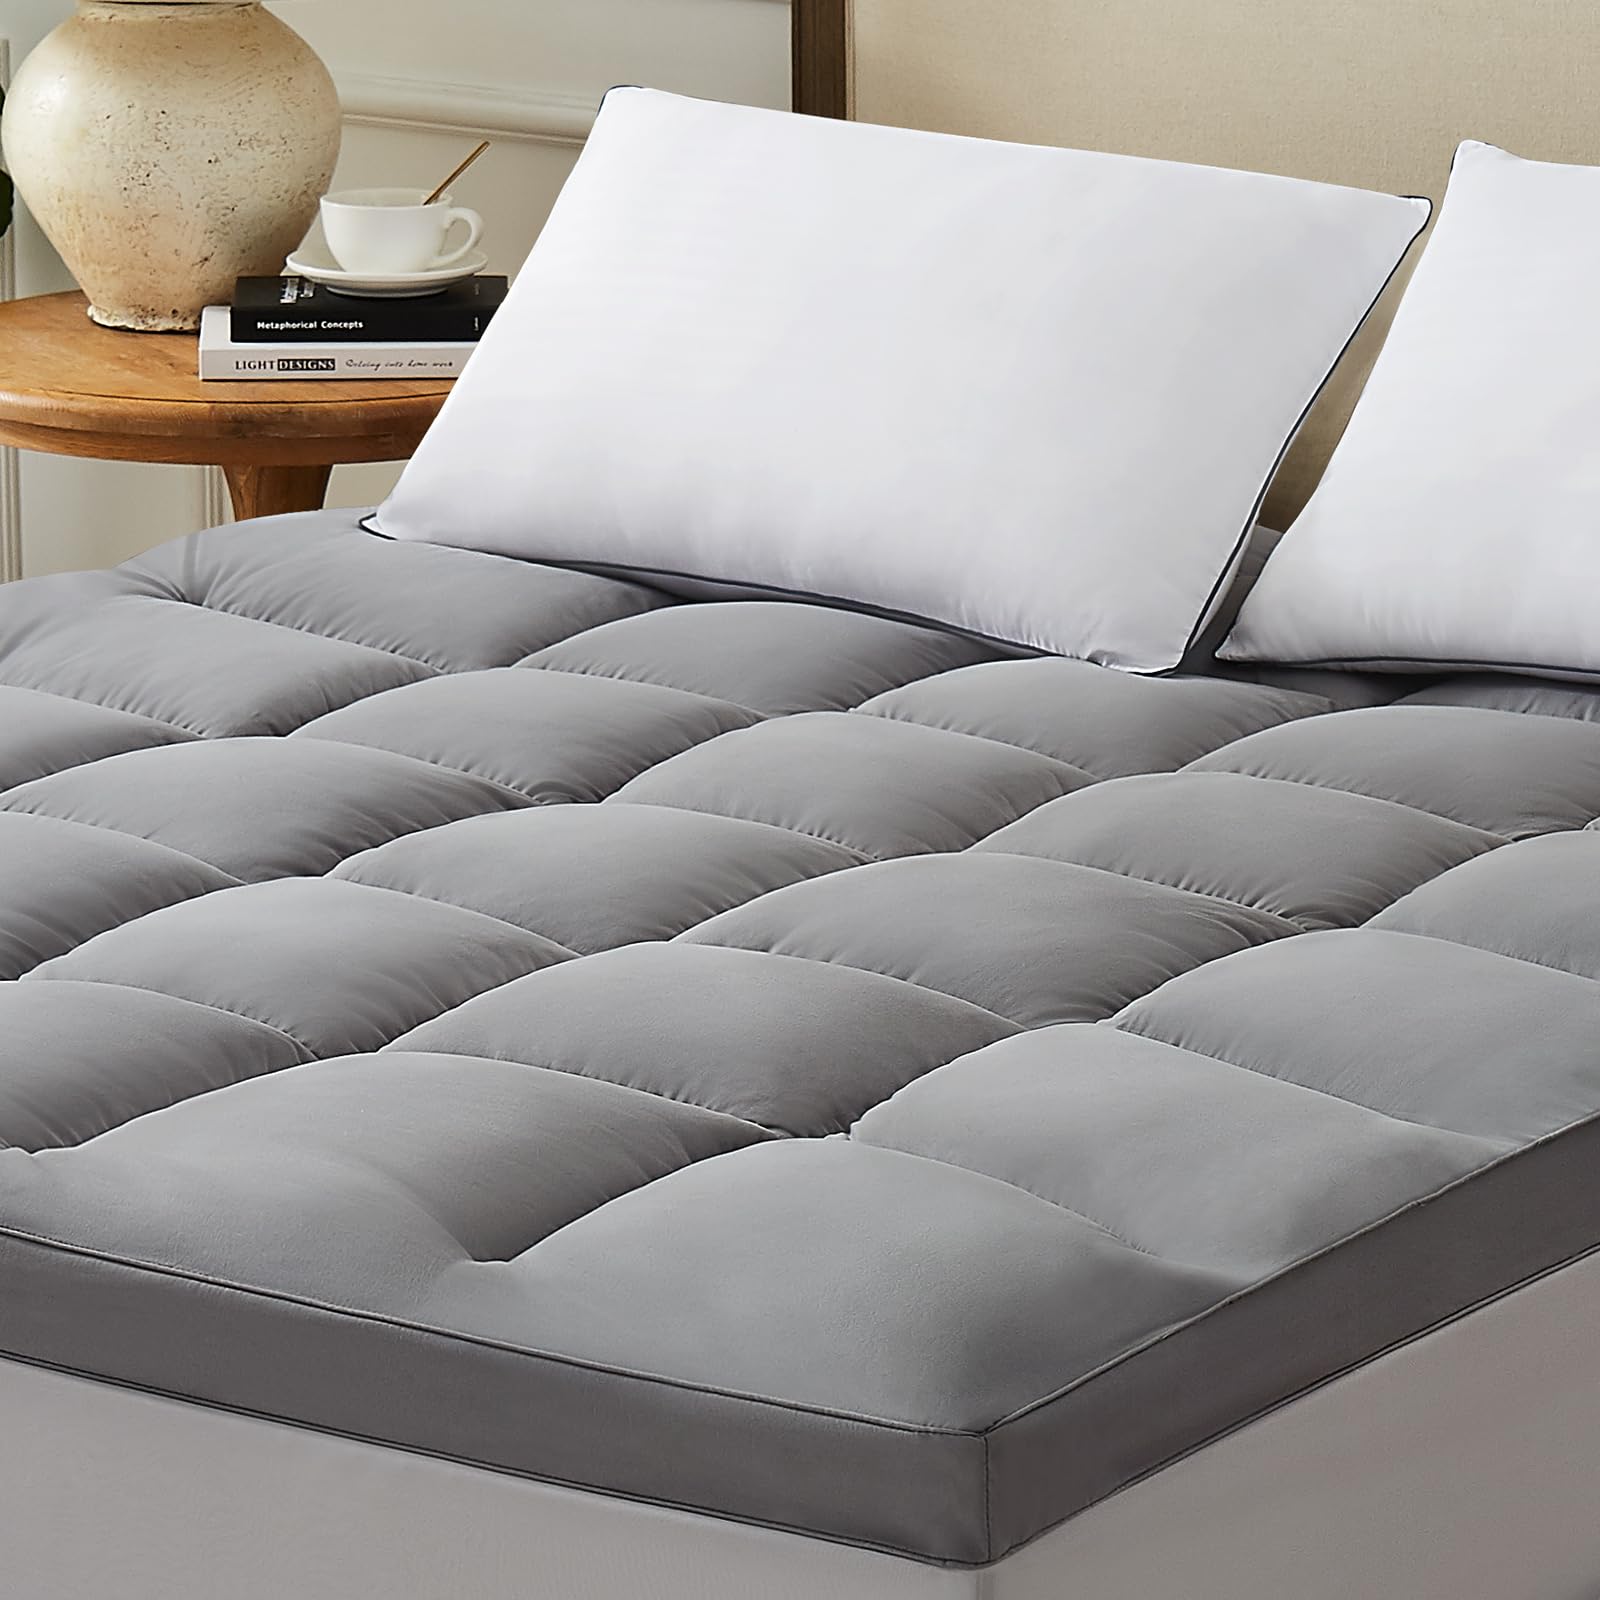 Homemate Cal King 床垫罩，1800TC 冷却床垫套，适合深度睡眠，超厚 3D 雪绒替代超填充毛绒枕头顶，带 8-21 英寸深口袋 - Cal King 尺寸，灰色